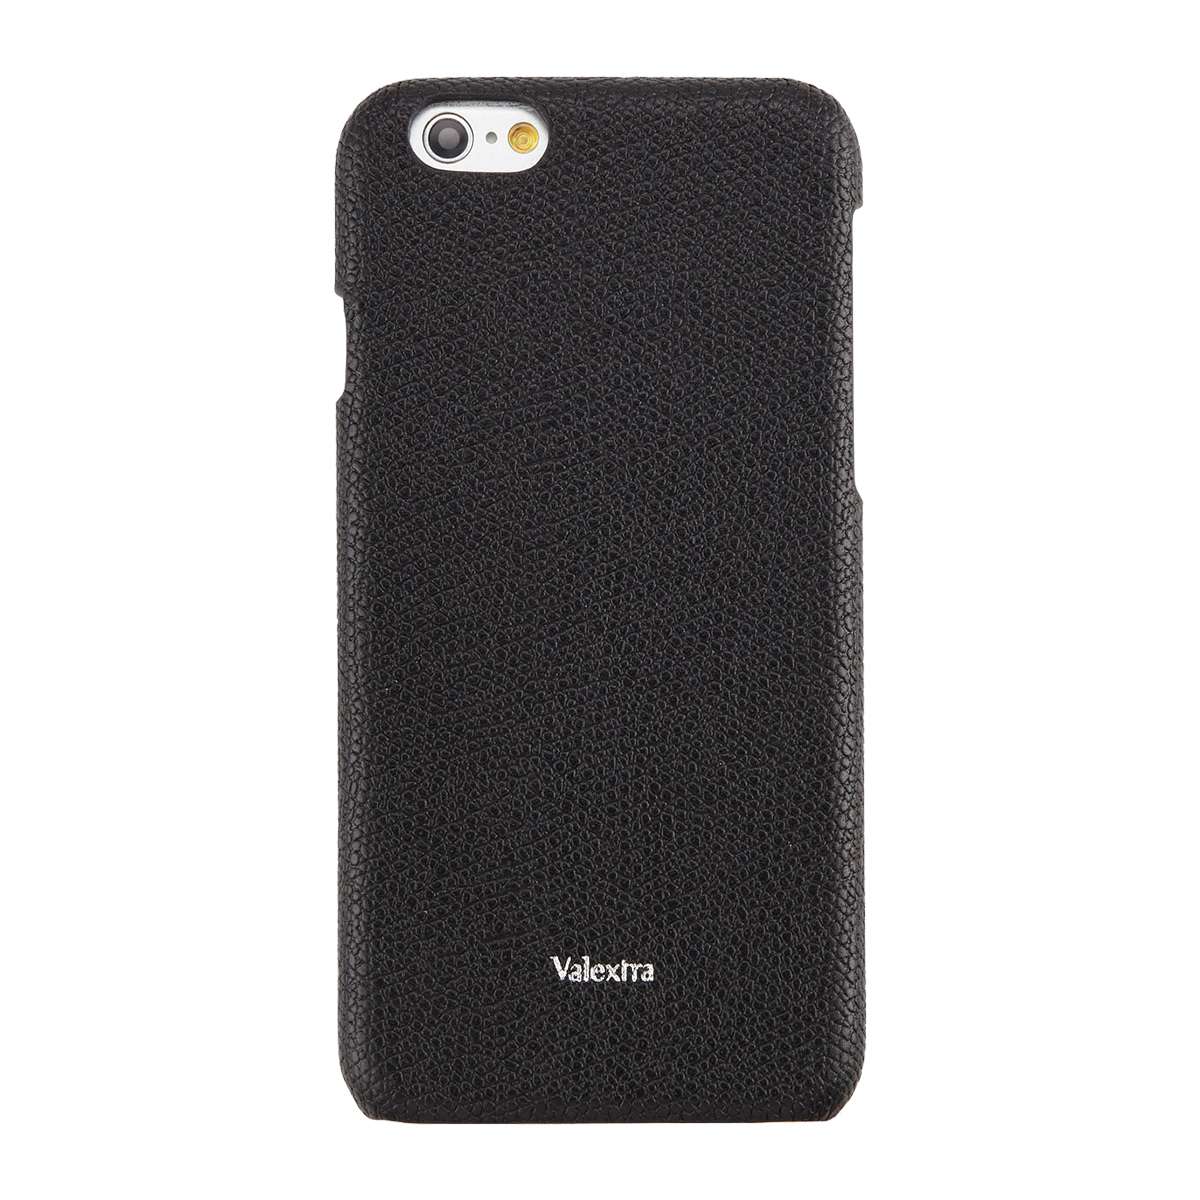 Valextra Leather iPhone 6/6s Case